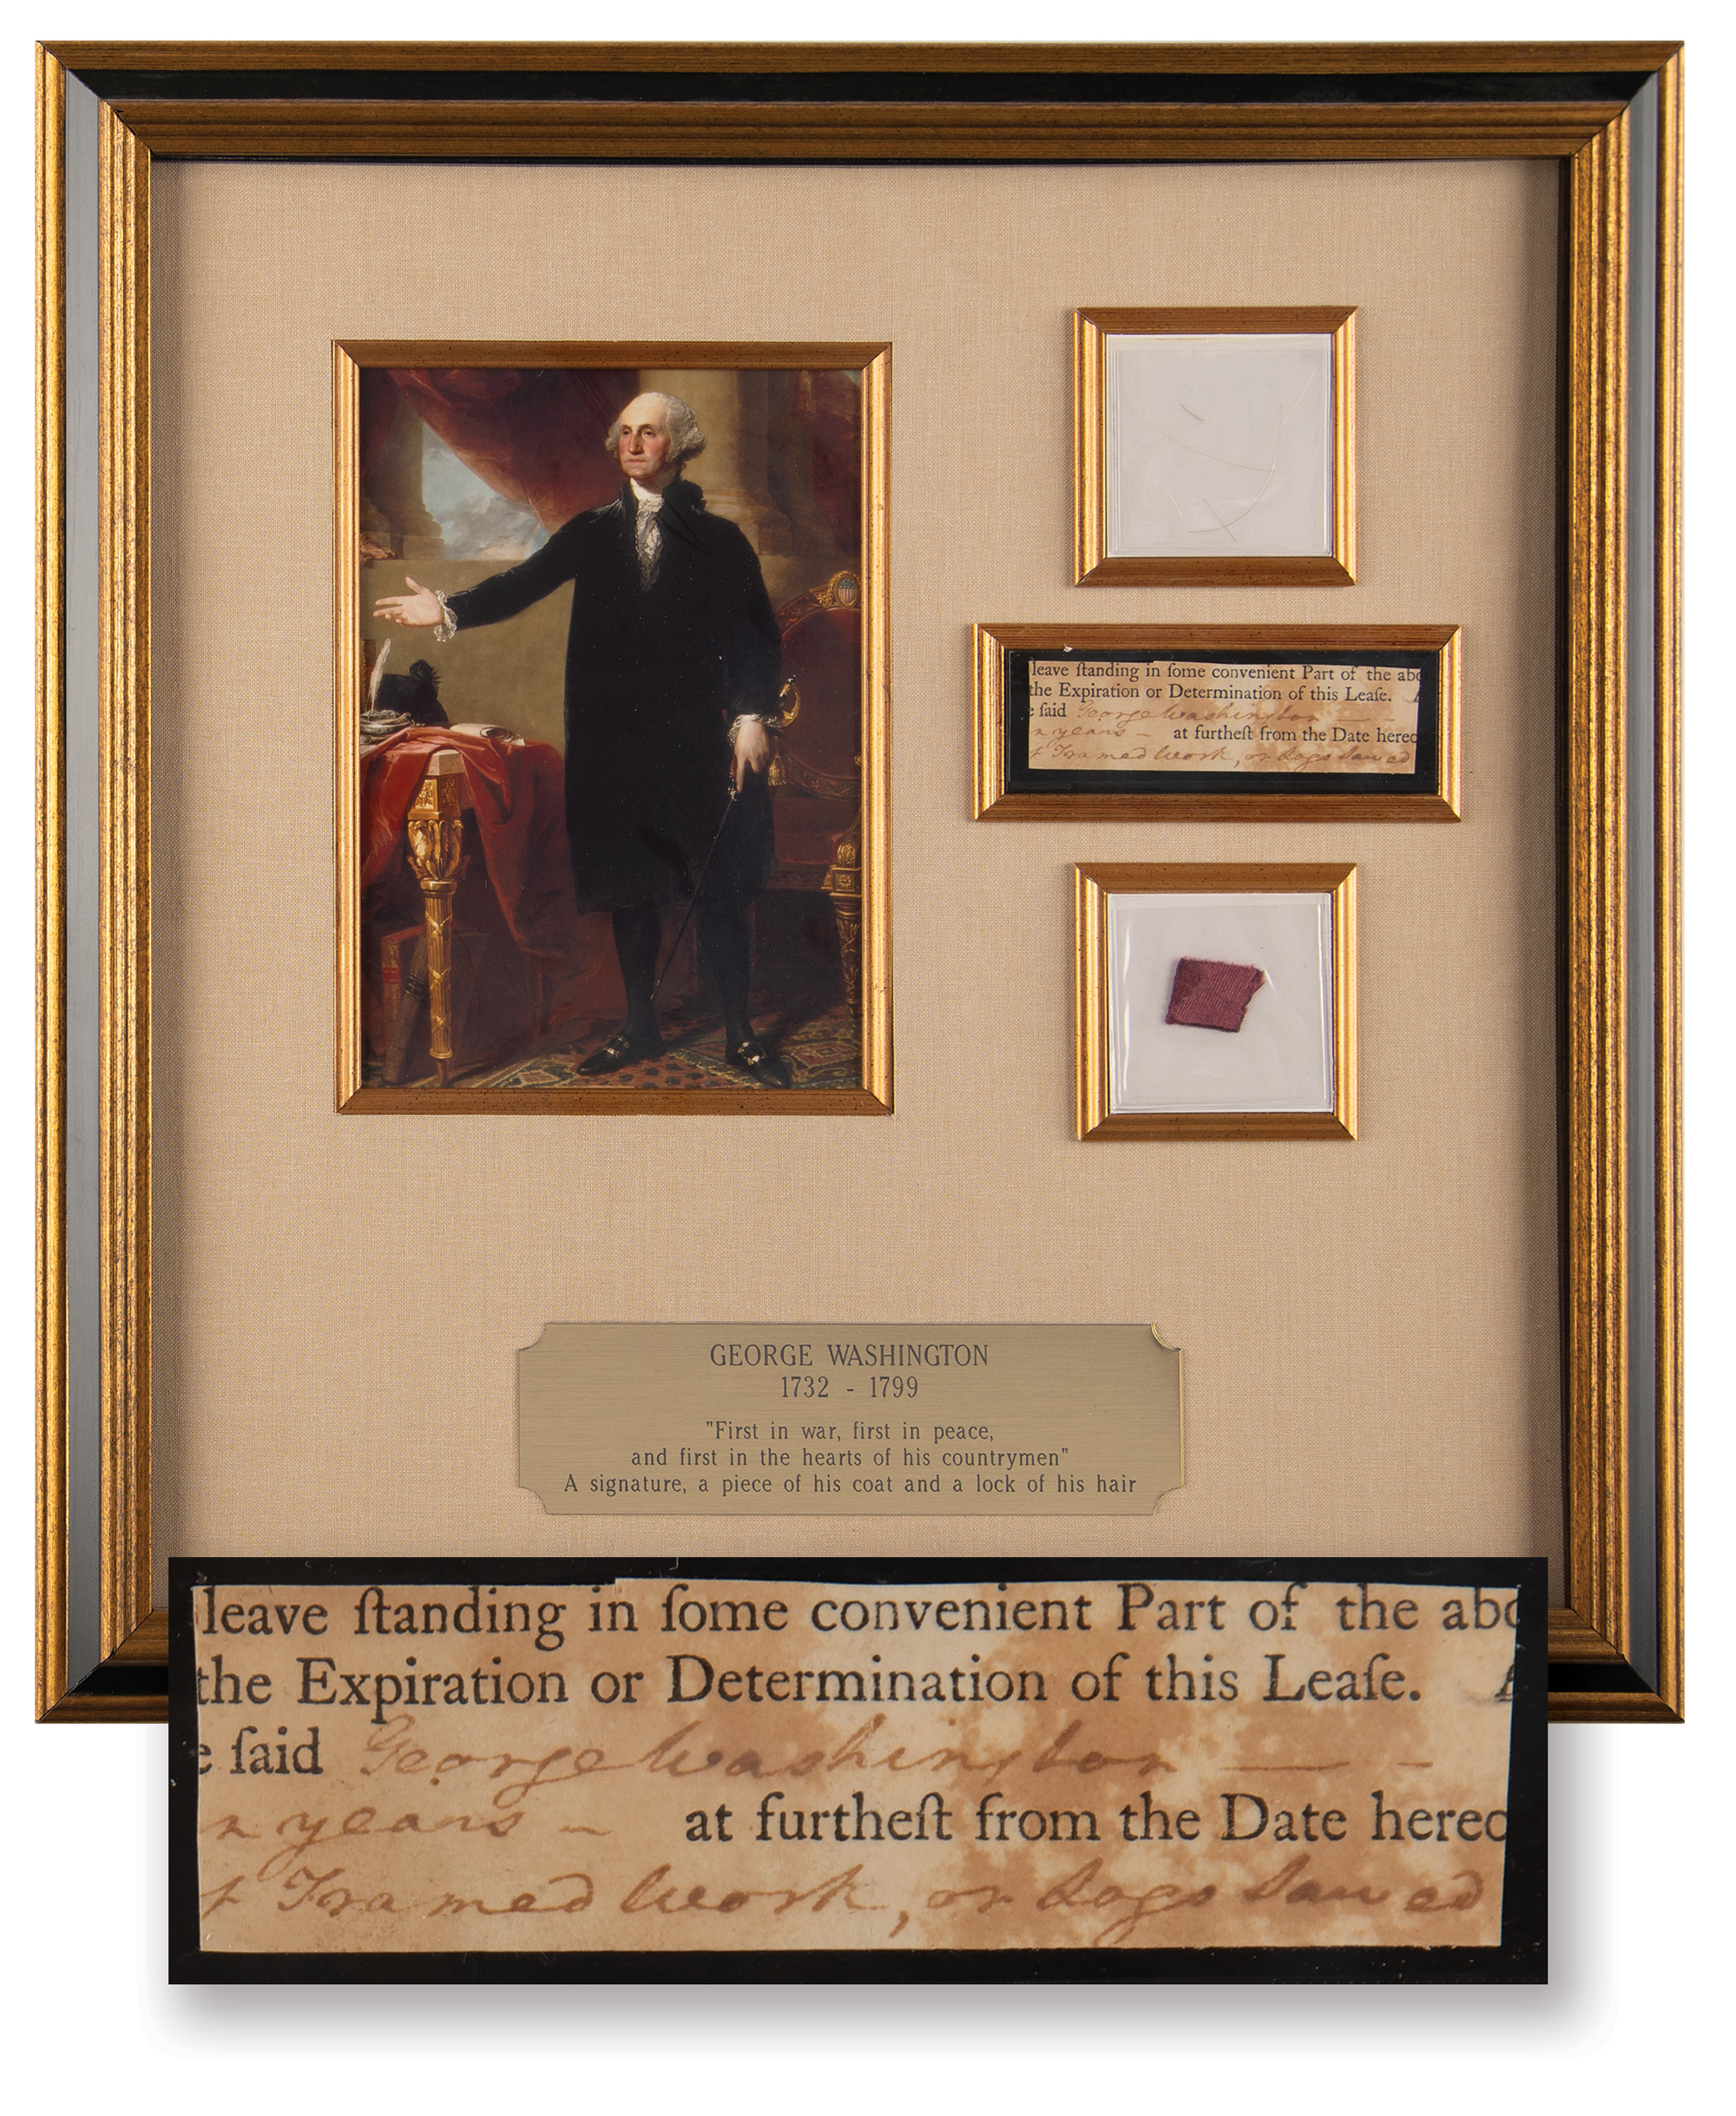 Lot #2 George Washington Signature, Cloak Swatch, and Lock of Hair - Image 1